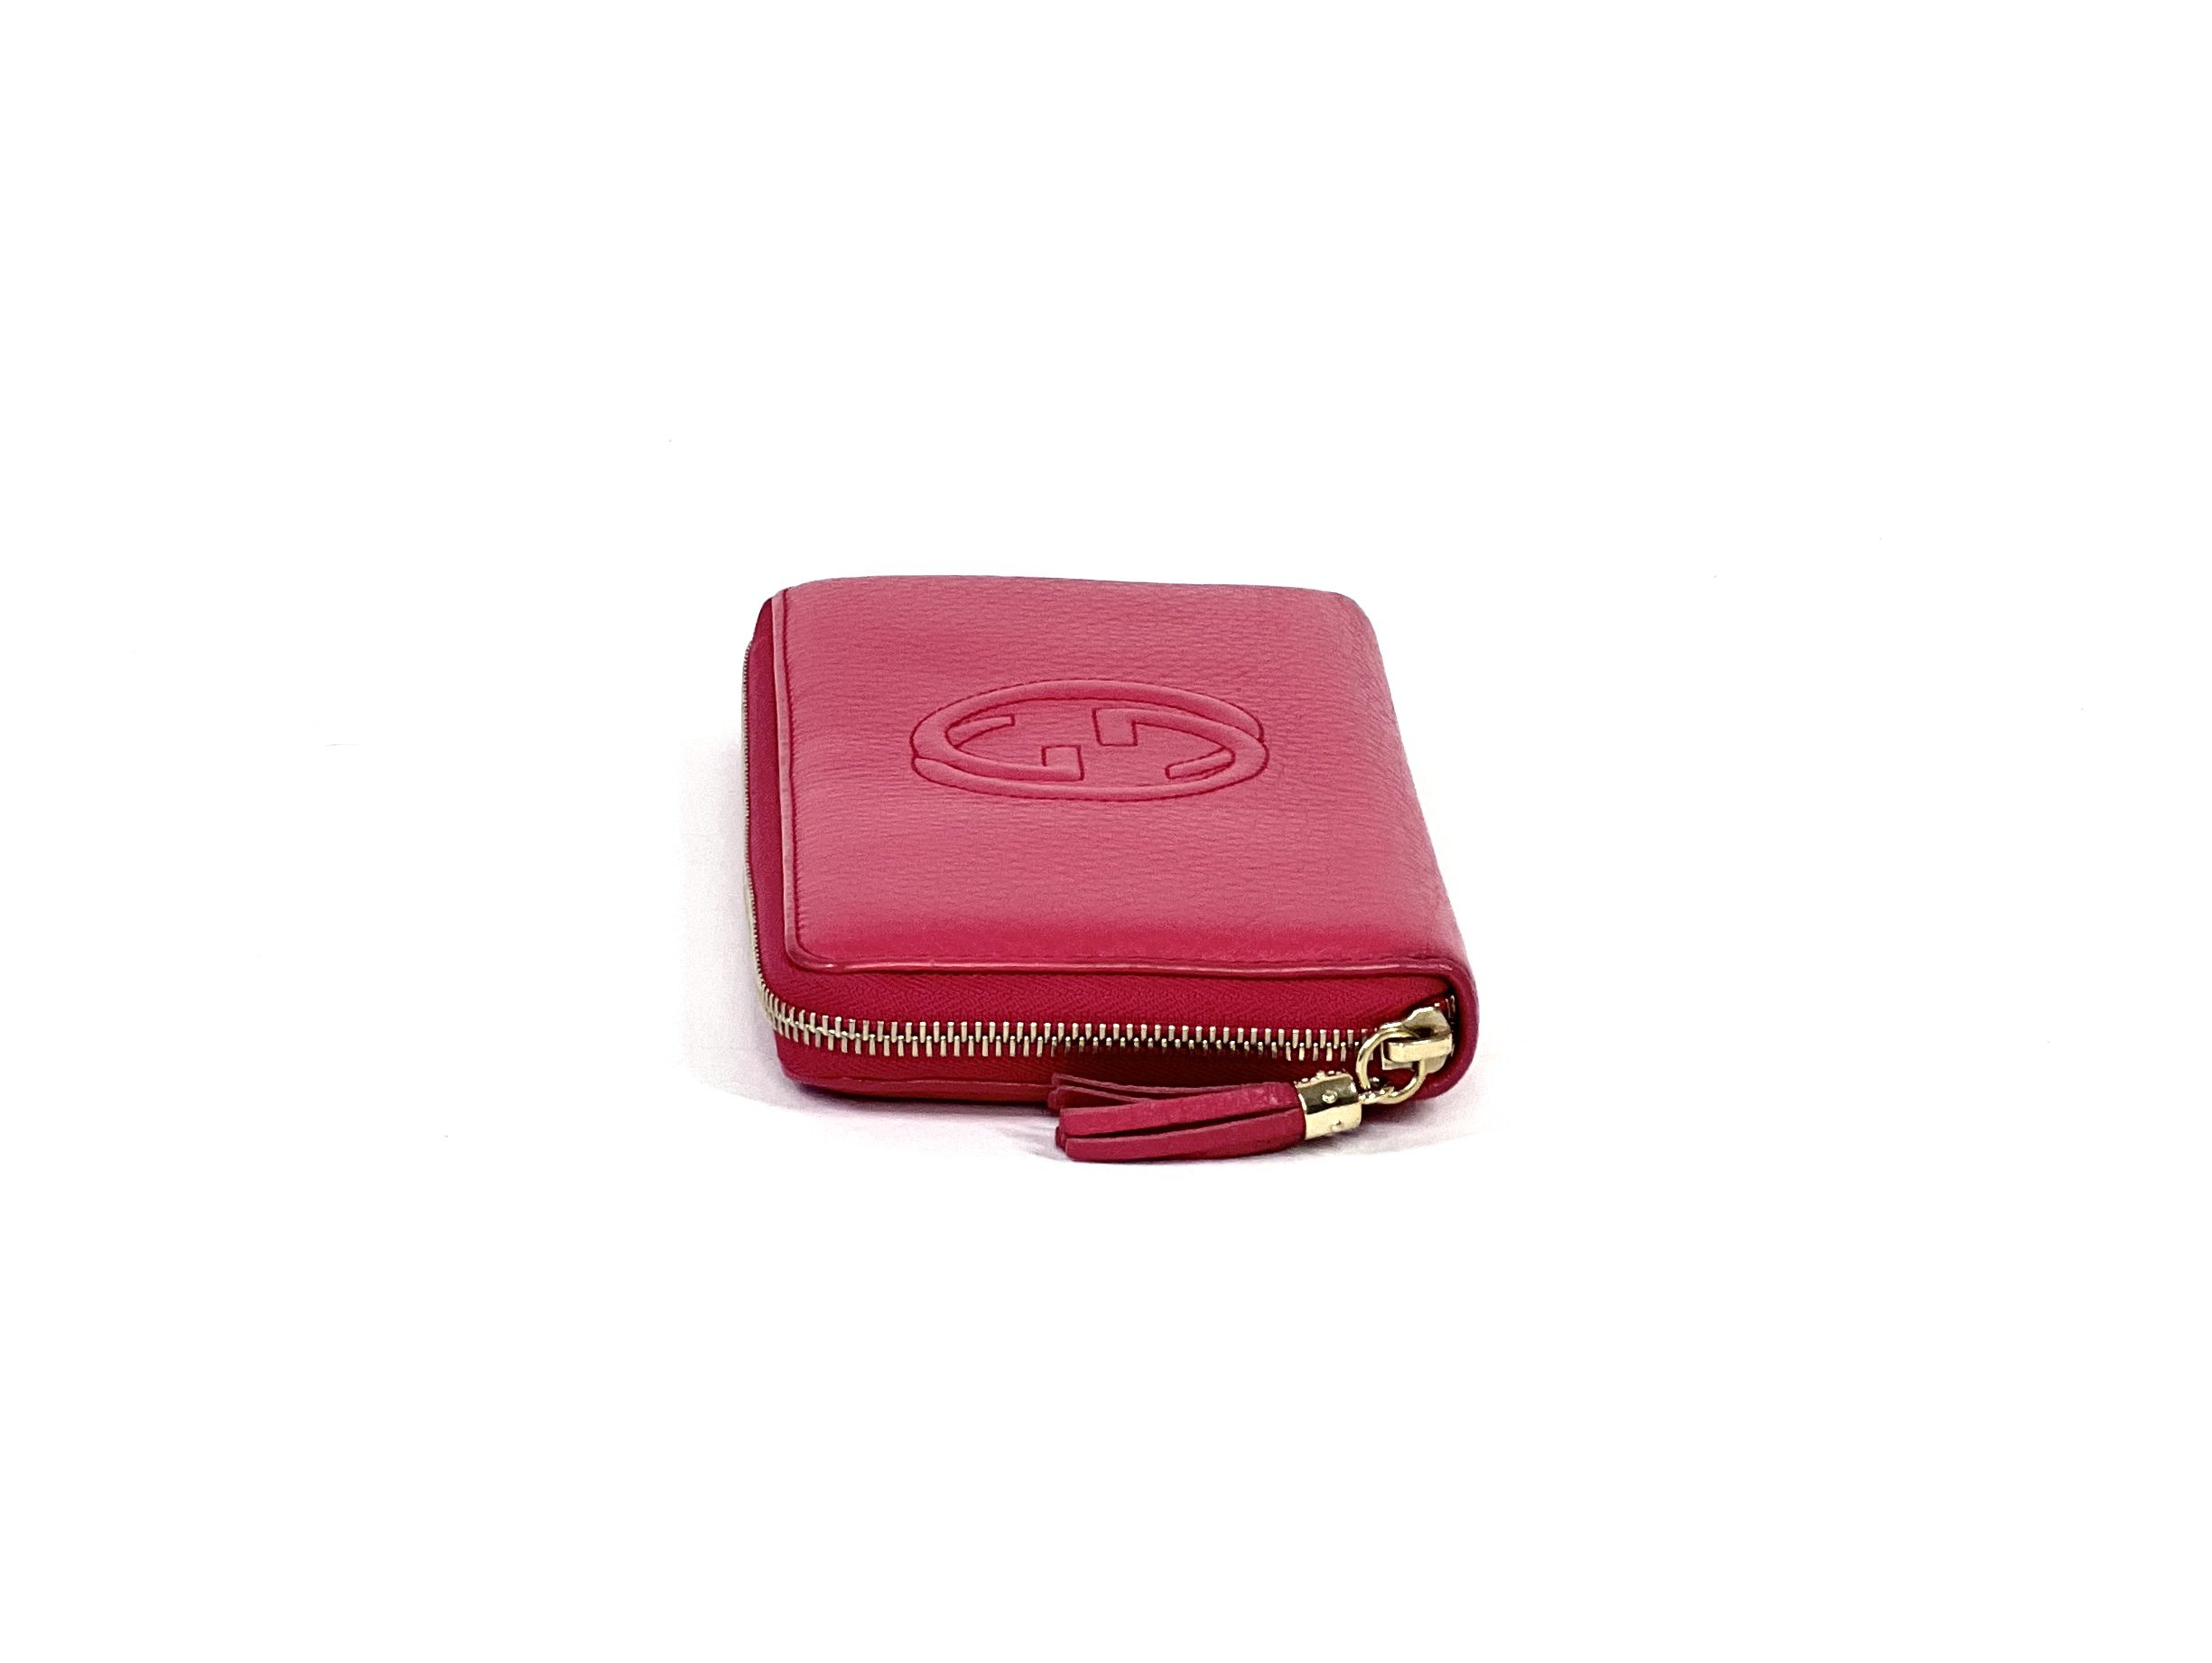 Gucci Ssima Medium Hobo Bag, Red, ModeSens